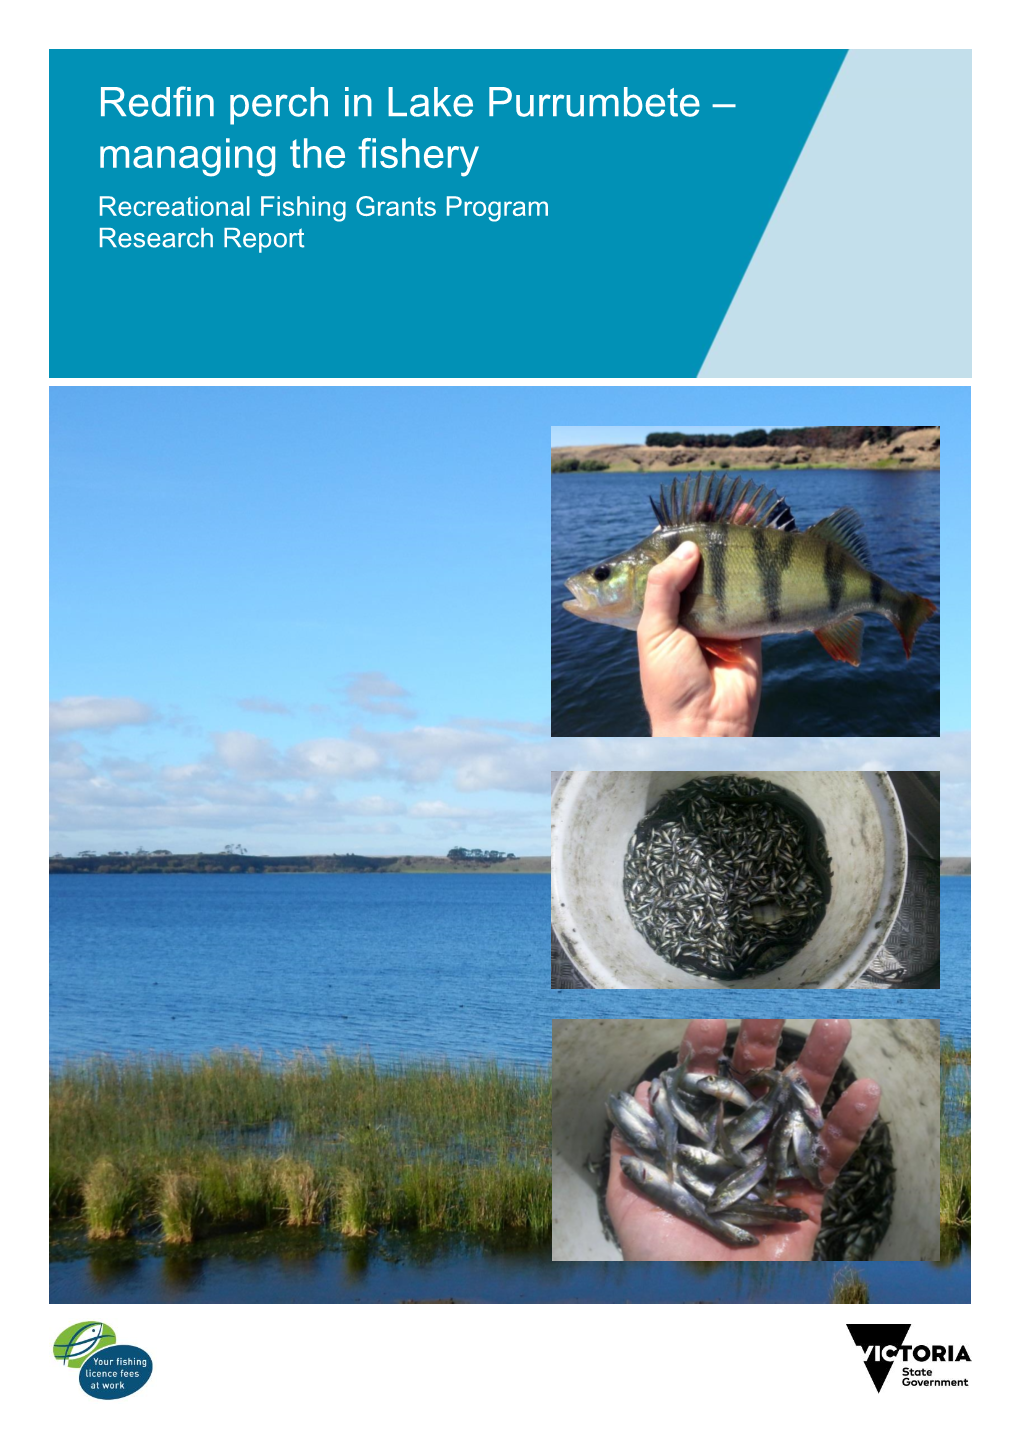 Redfin Perch in Lake Purrumbete – Managing the Fishery Recreational Fishing Grants Program Research Report